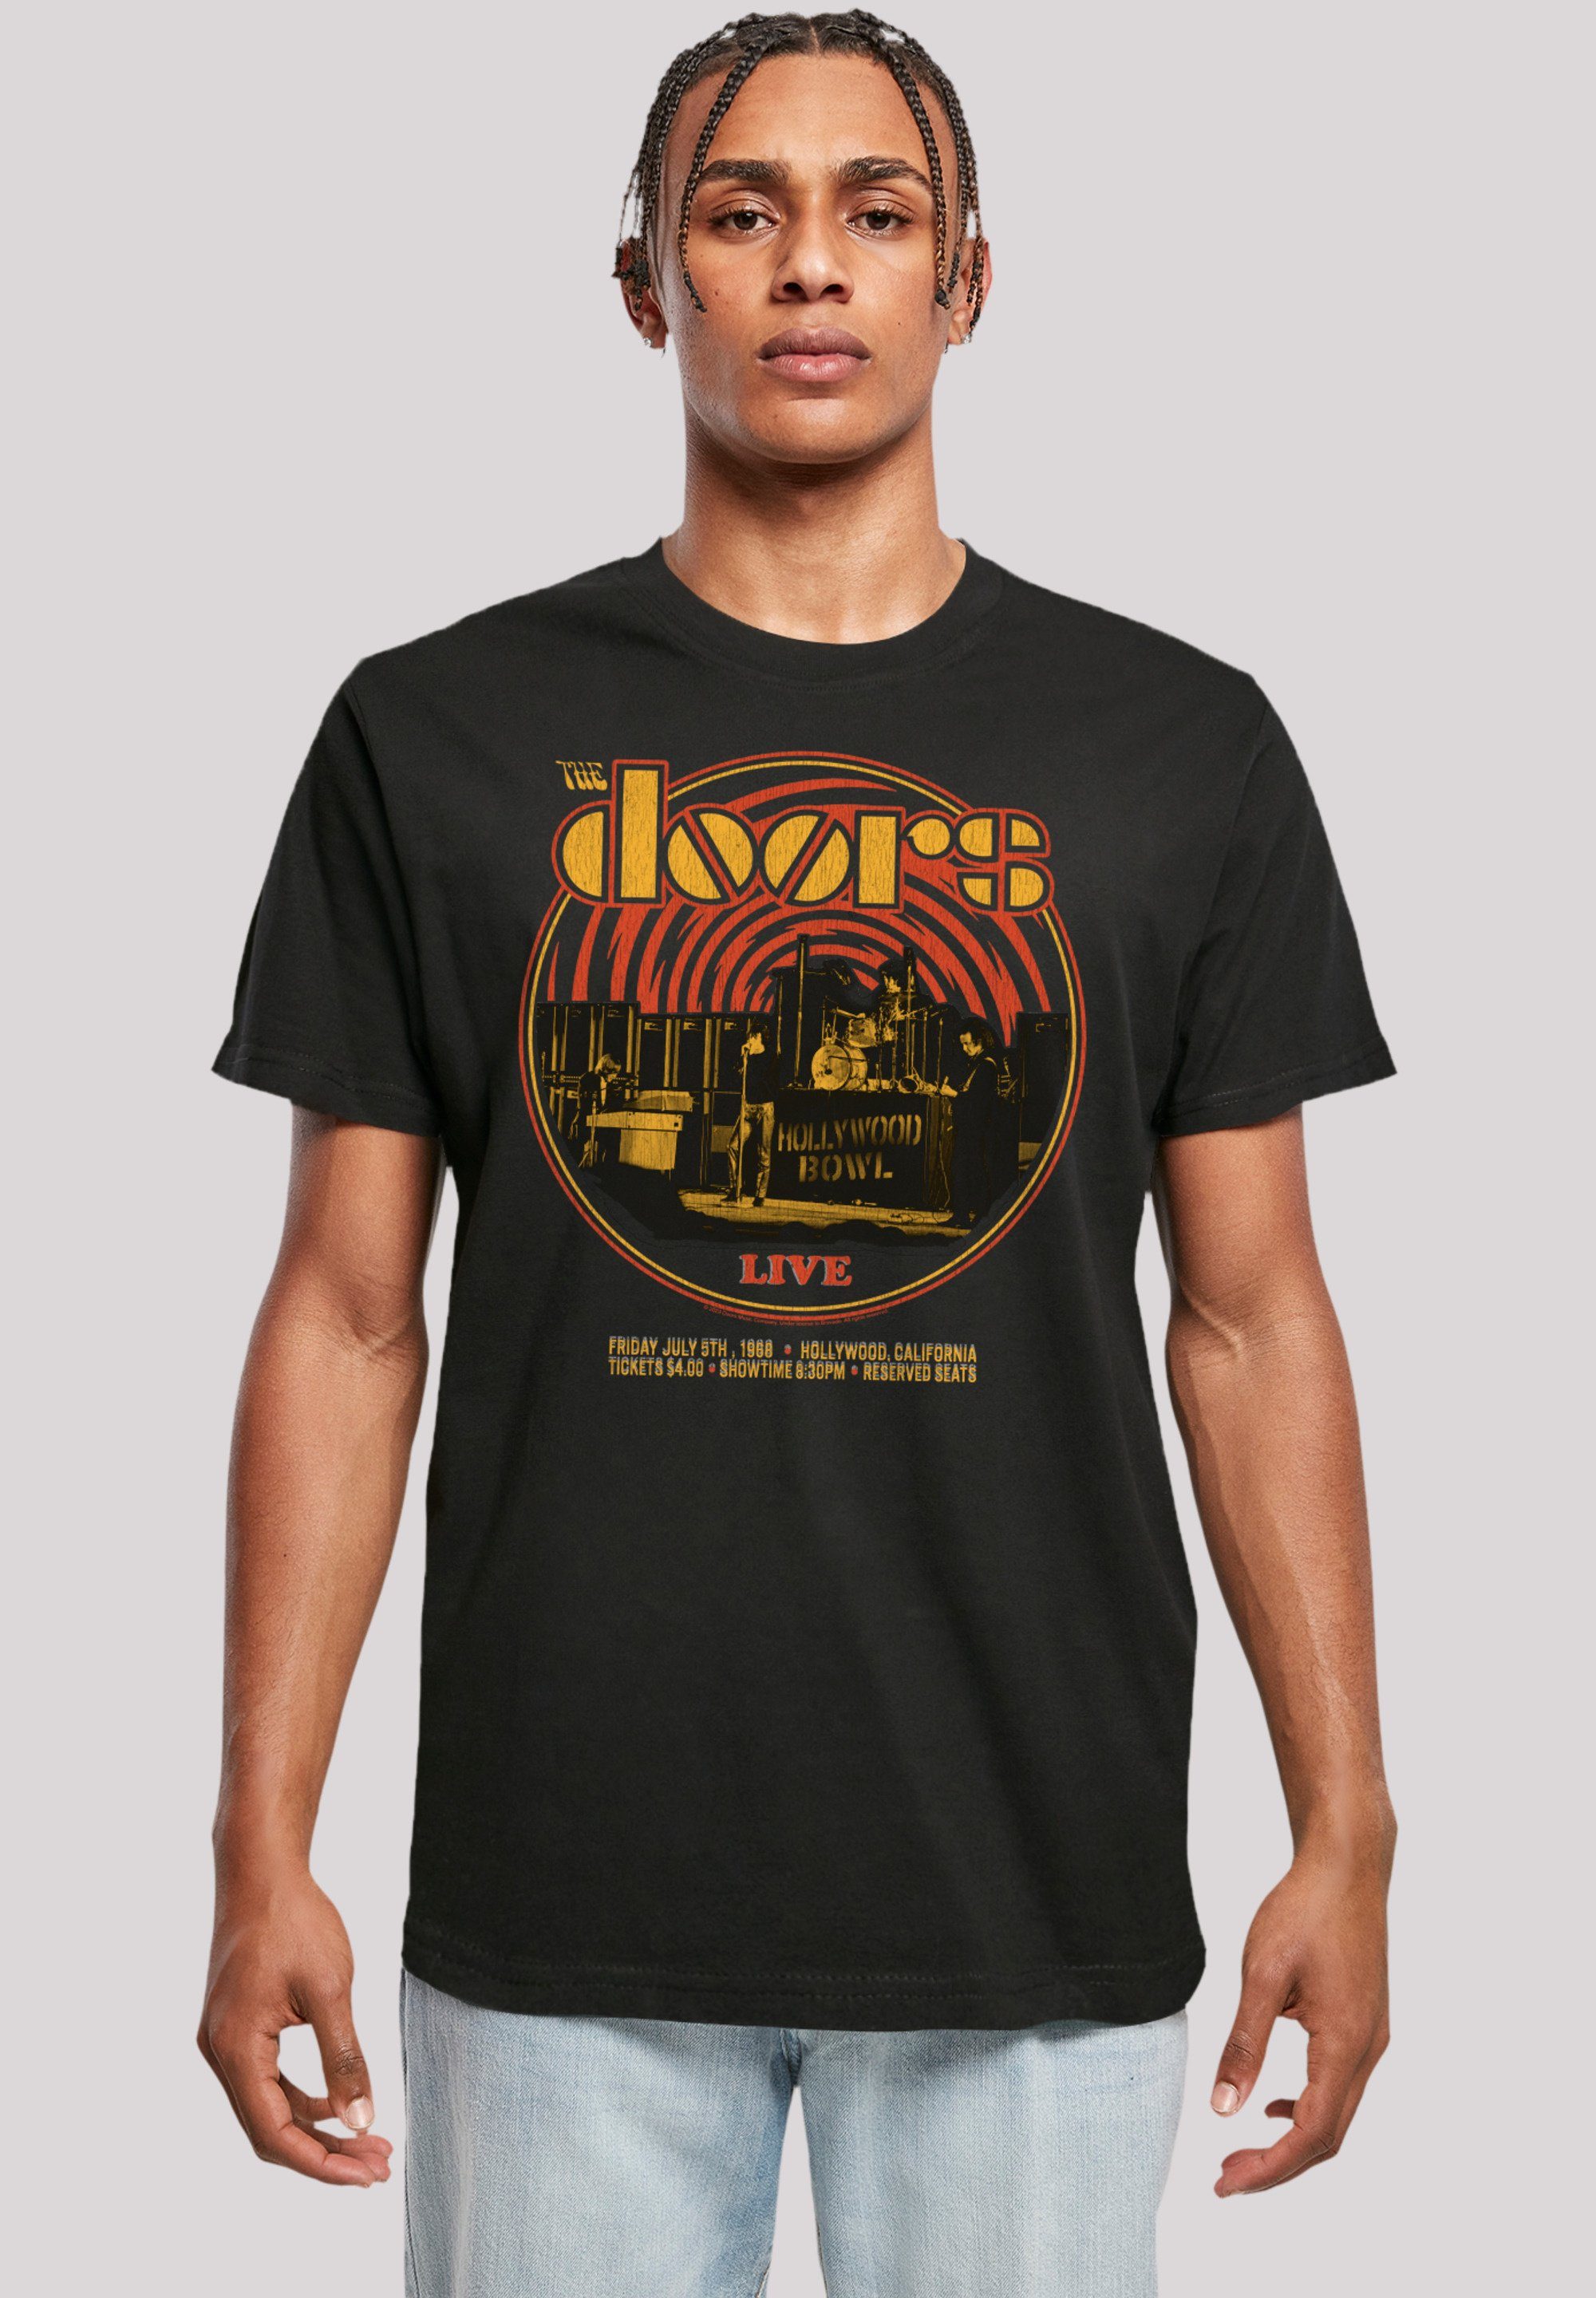 The Doors F4NT4STIC 68 Musik, langer und Schnitt Körperbetonter, Live T-Shirt Logo, schmaler Band, Retro Music